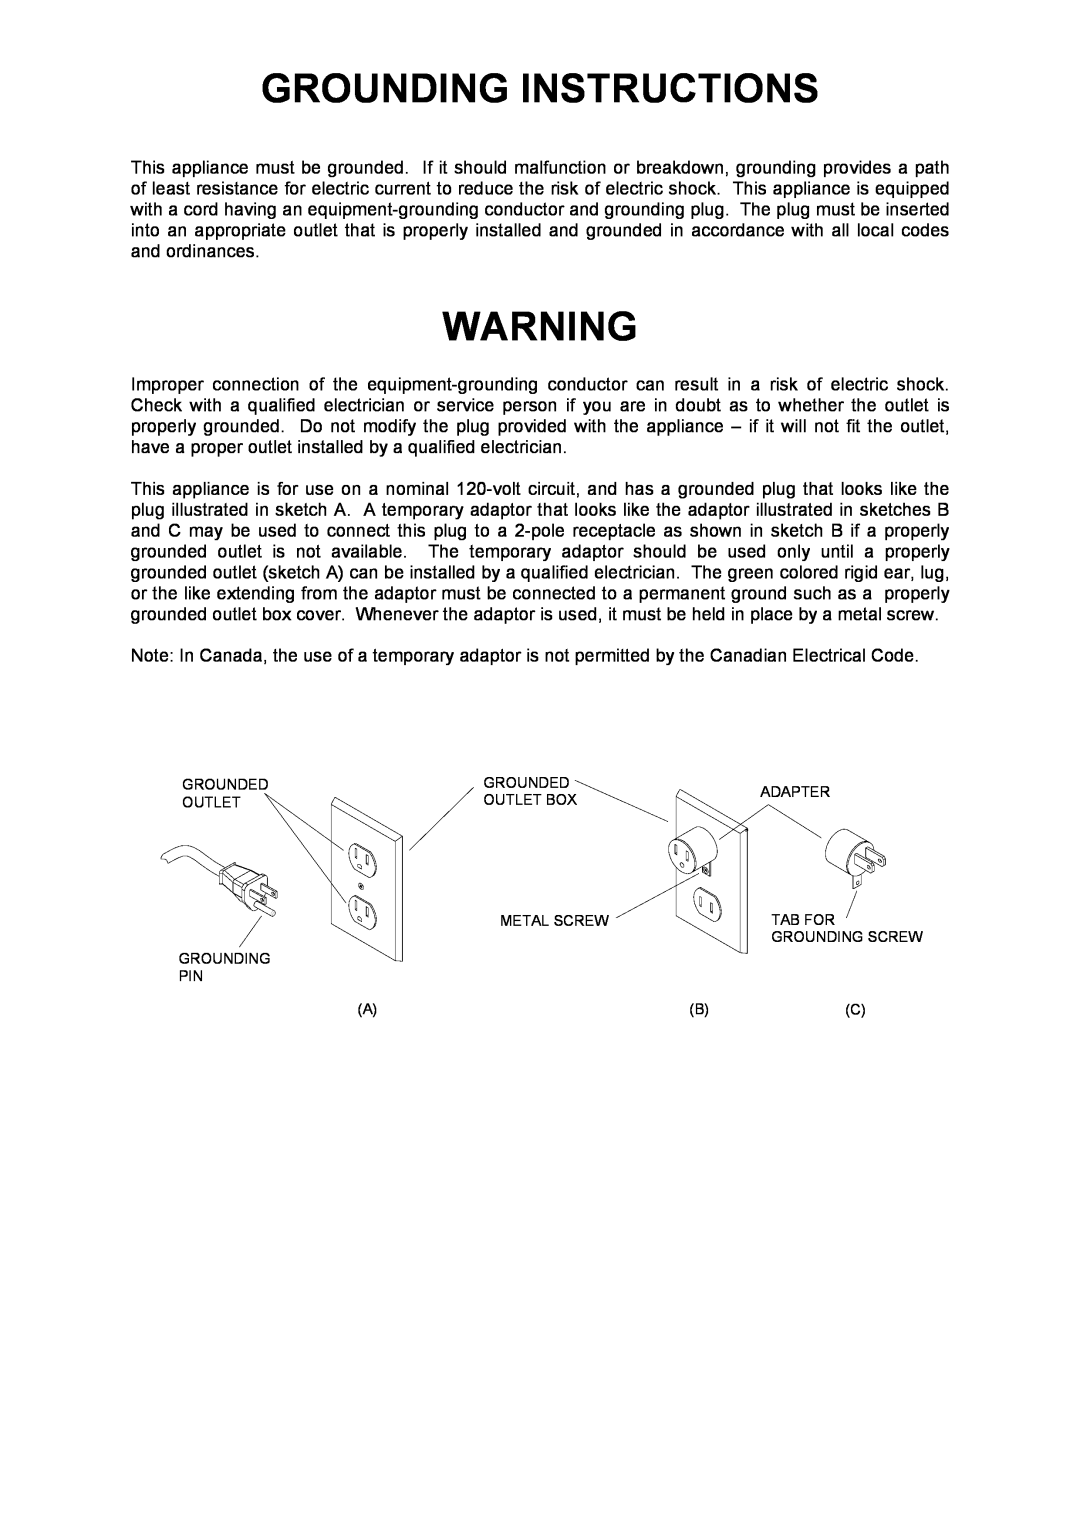 Windsor SRS15, 10120220 manual Grounding Instructions, Grounded Outlet Grounding Pin A, Grounded Outlet Box Metal Screw 